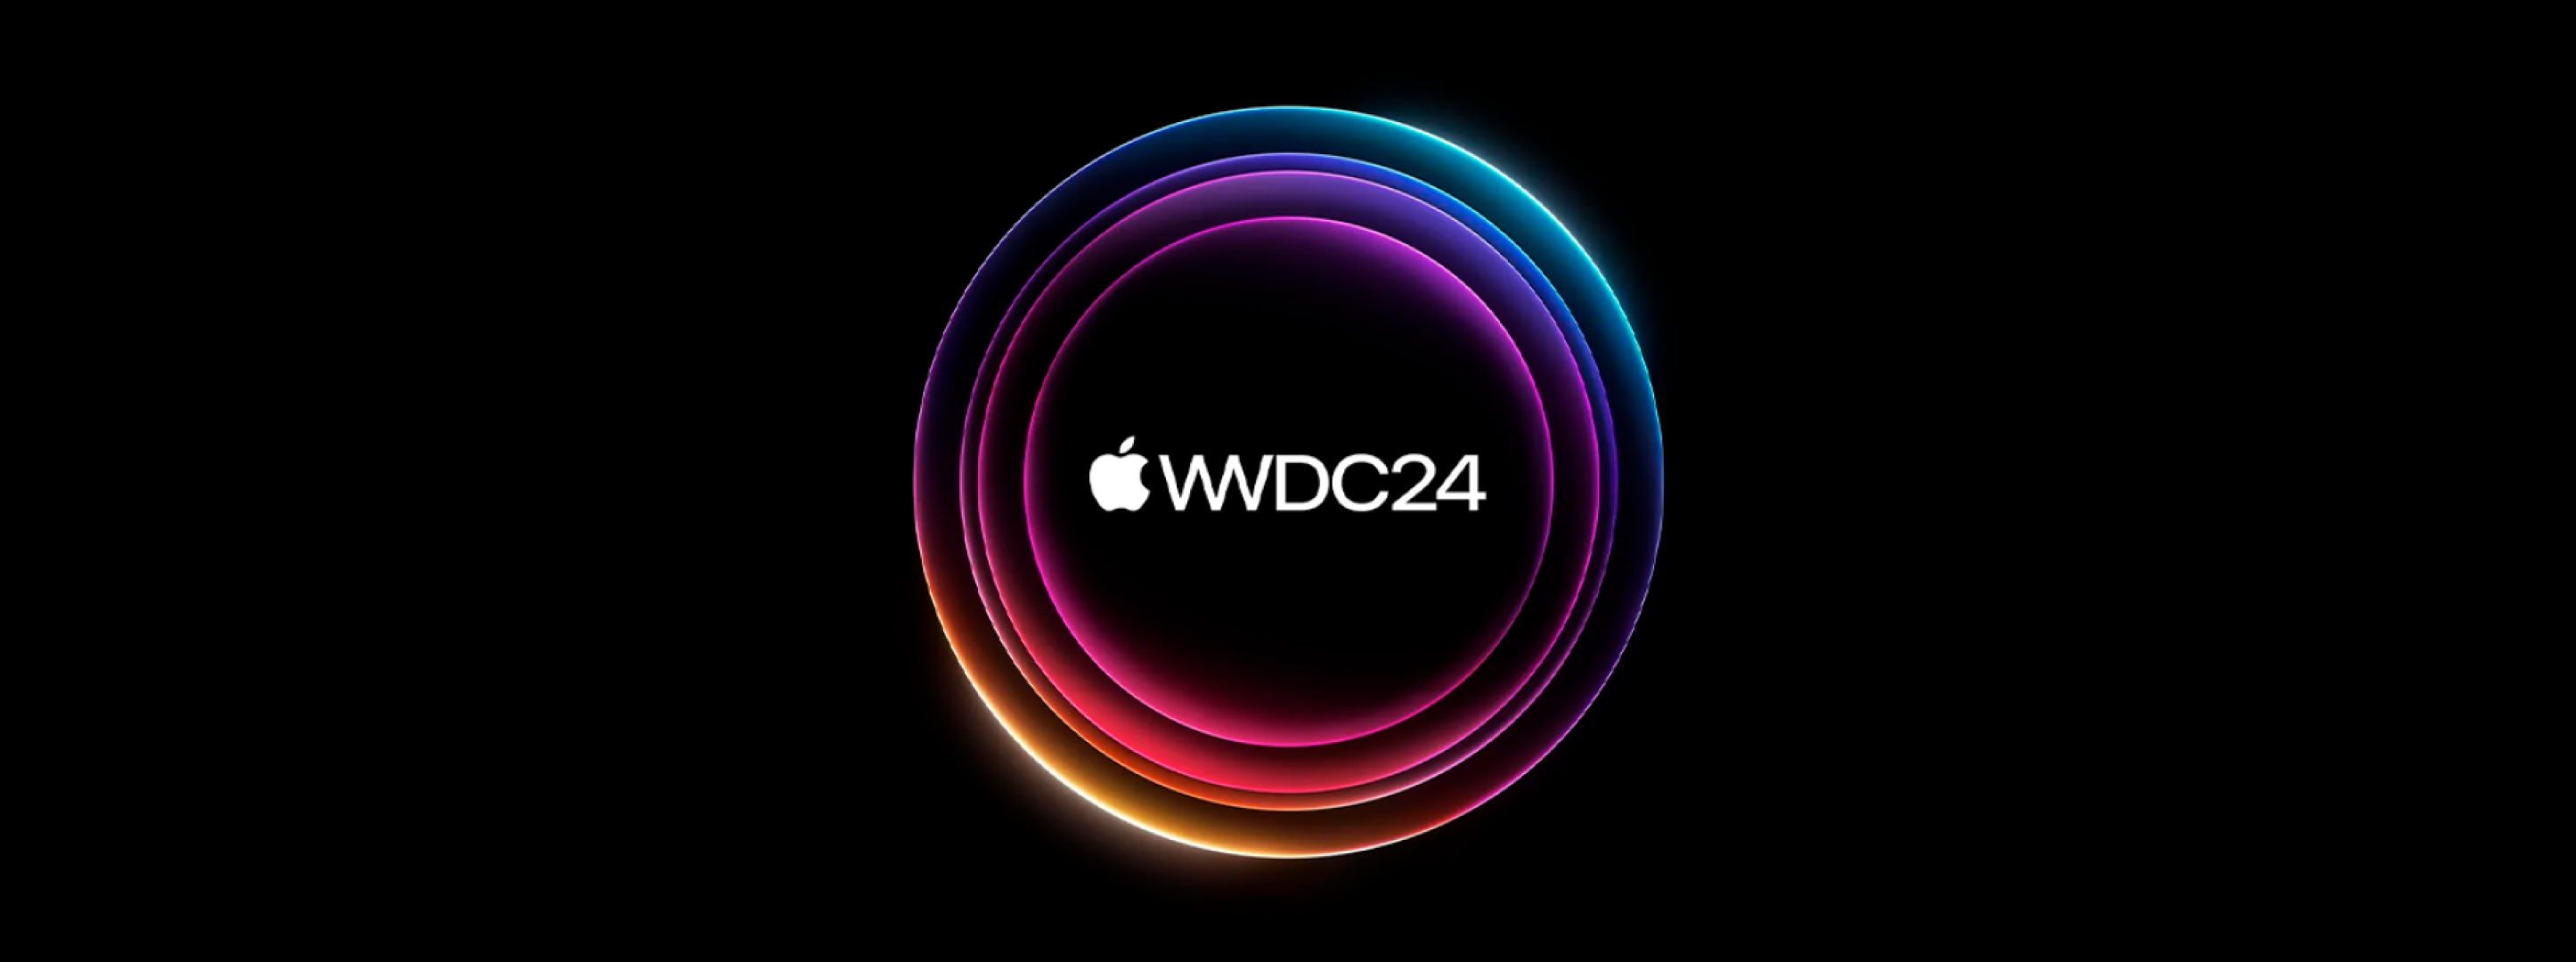 WWDC 2024 - Apple anuncia grandes novidades!